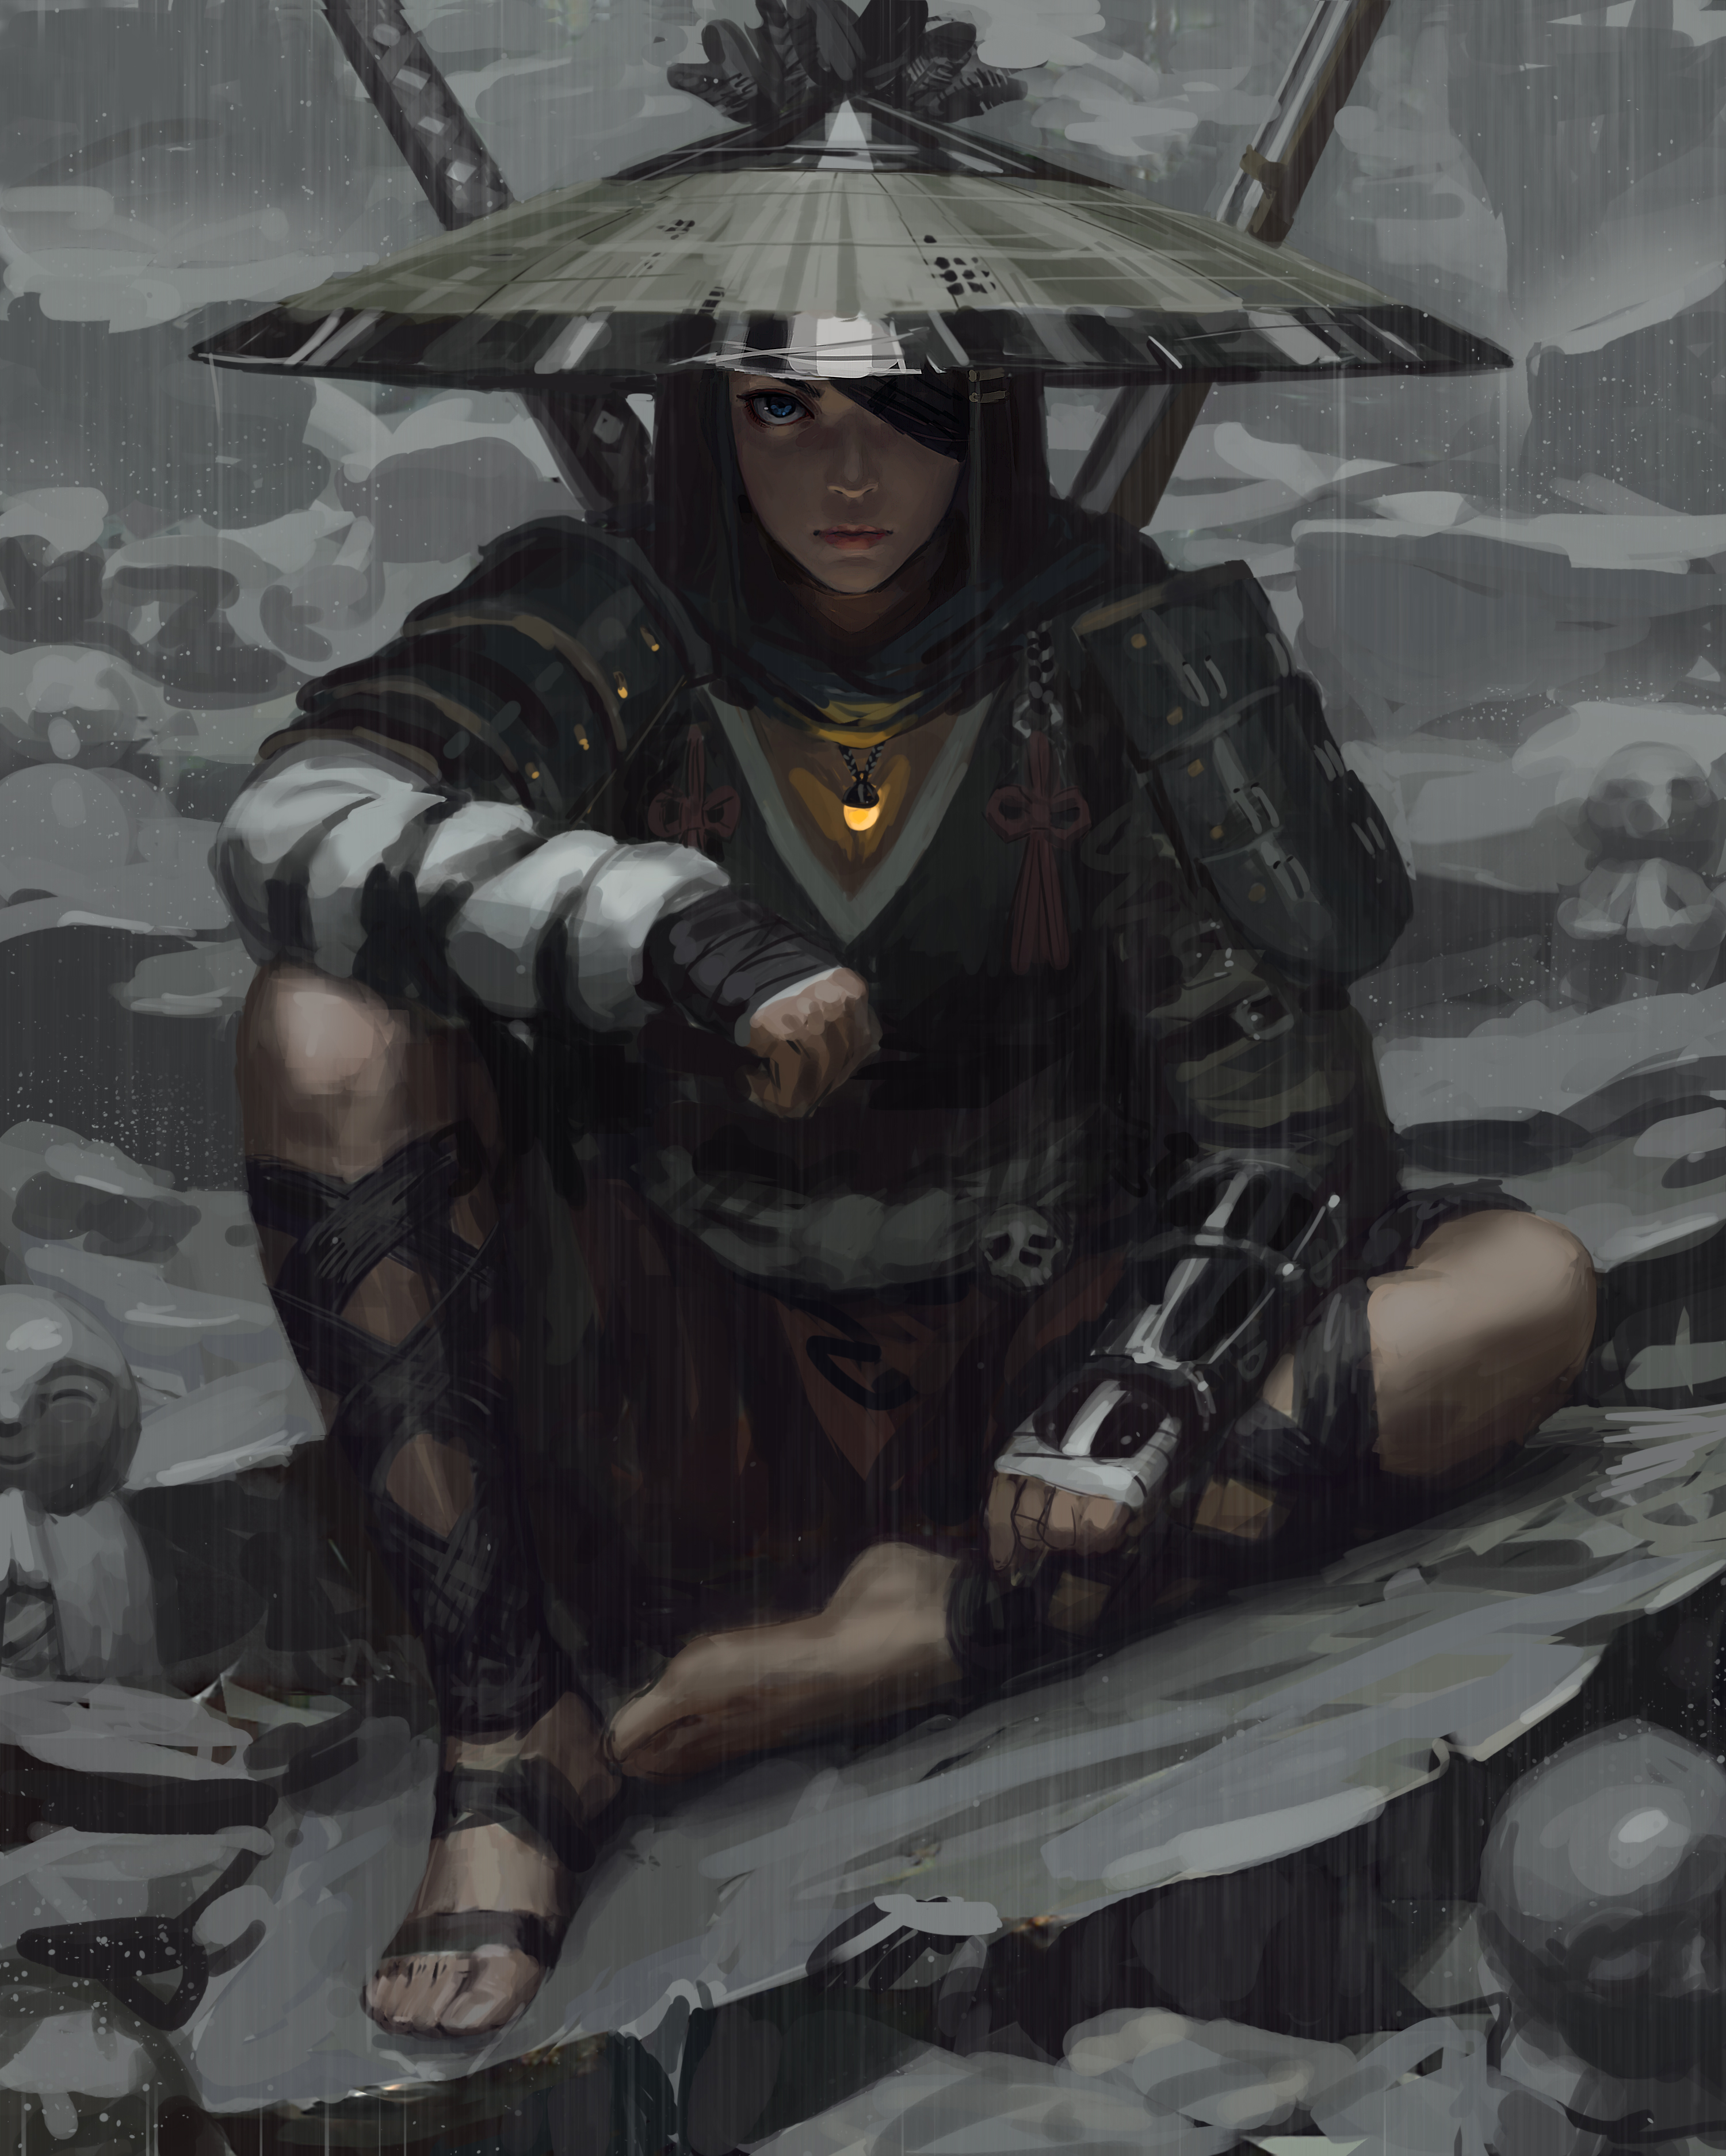 General 3000x3748 GUWEIZ eyepatches sitting armor katana fantasy girl warrior fantasy art